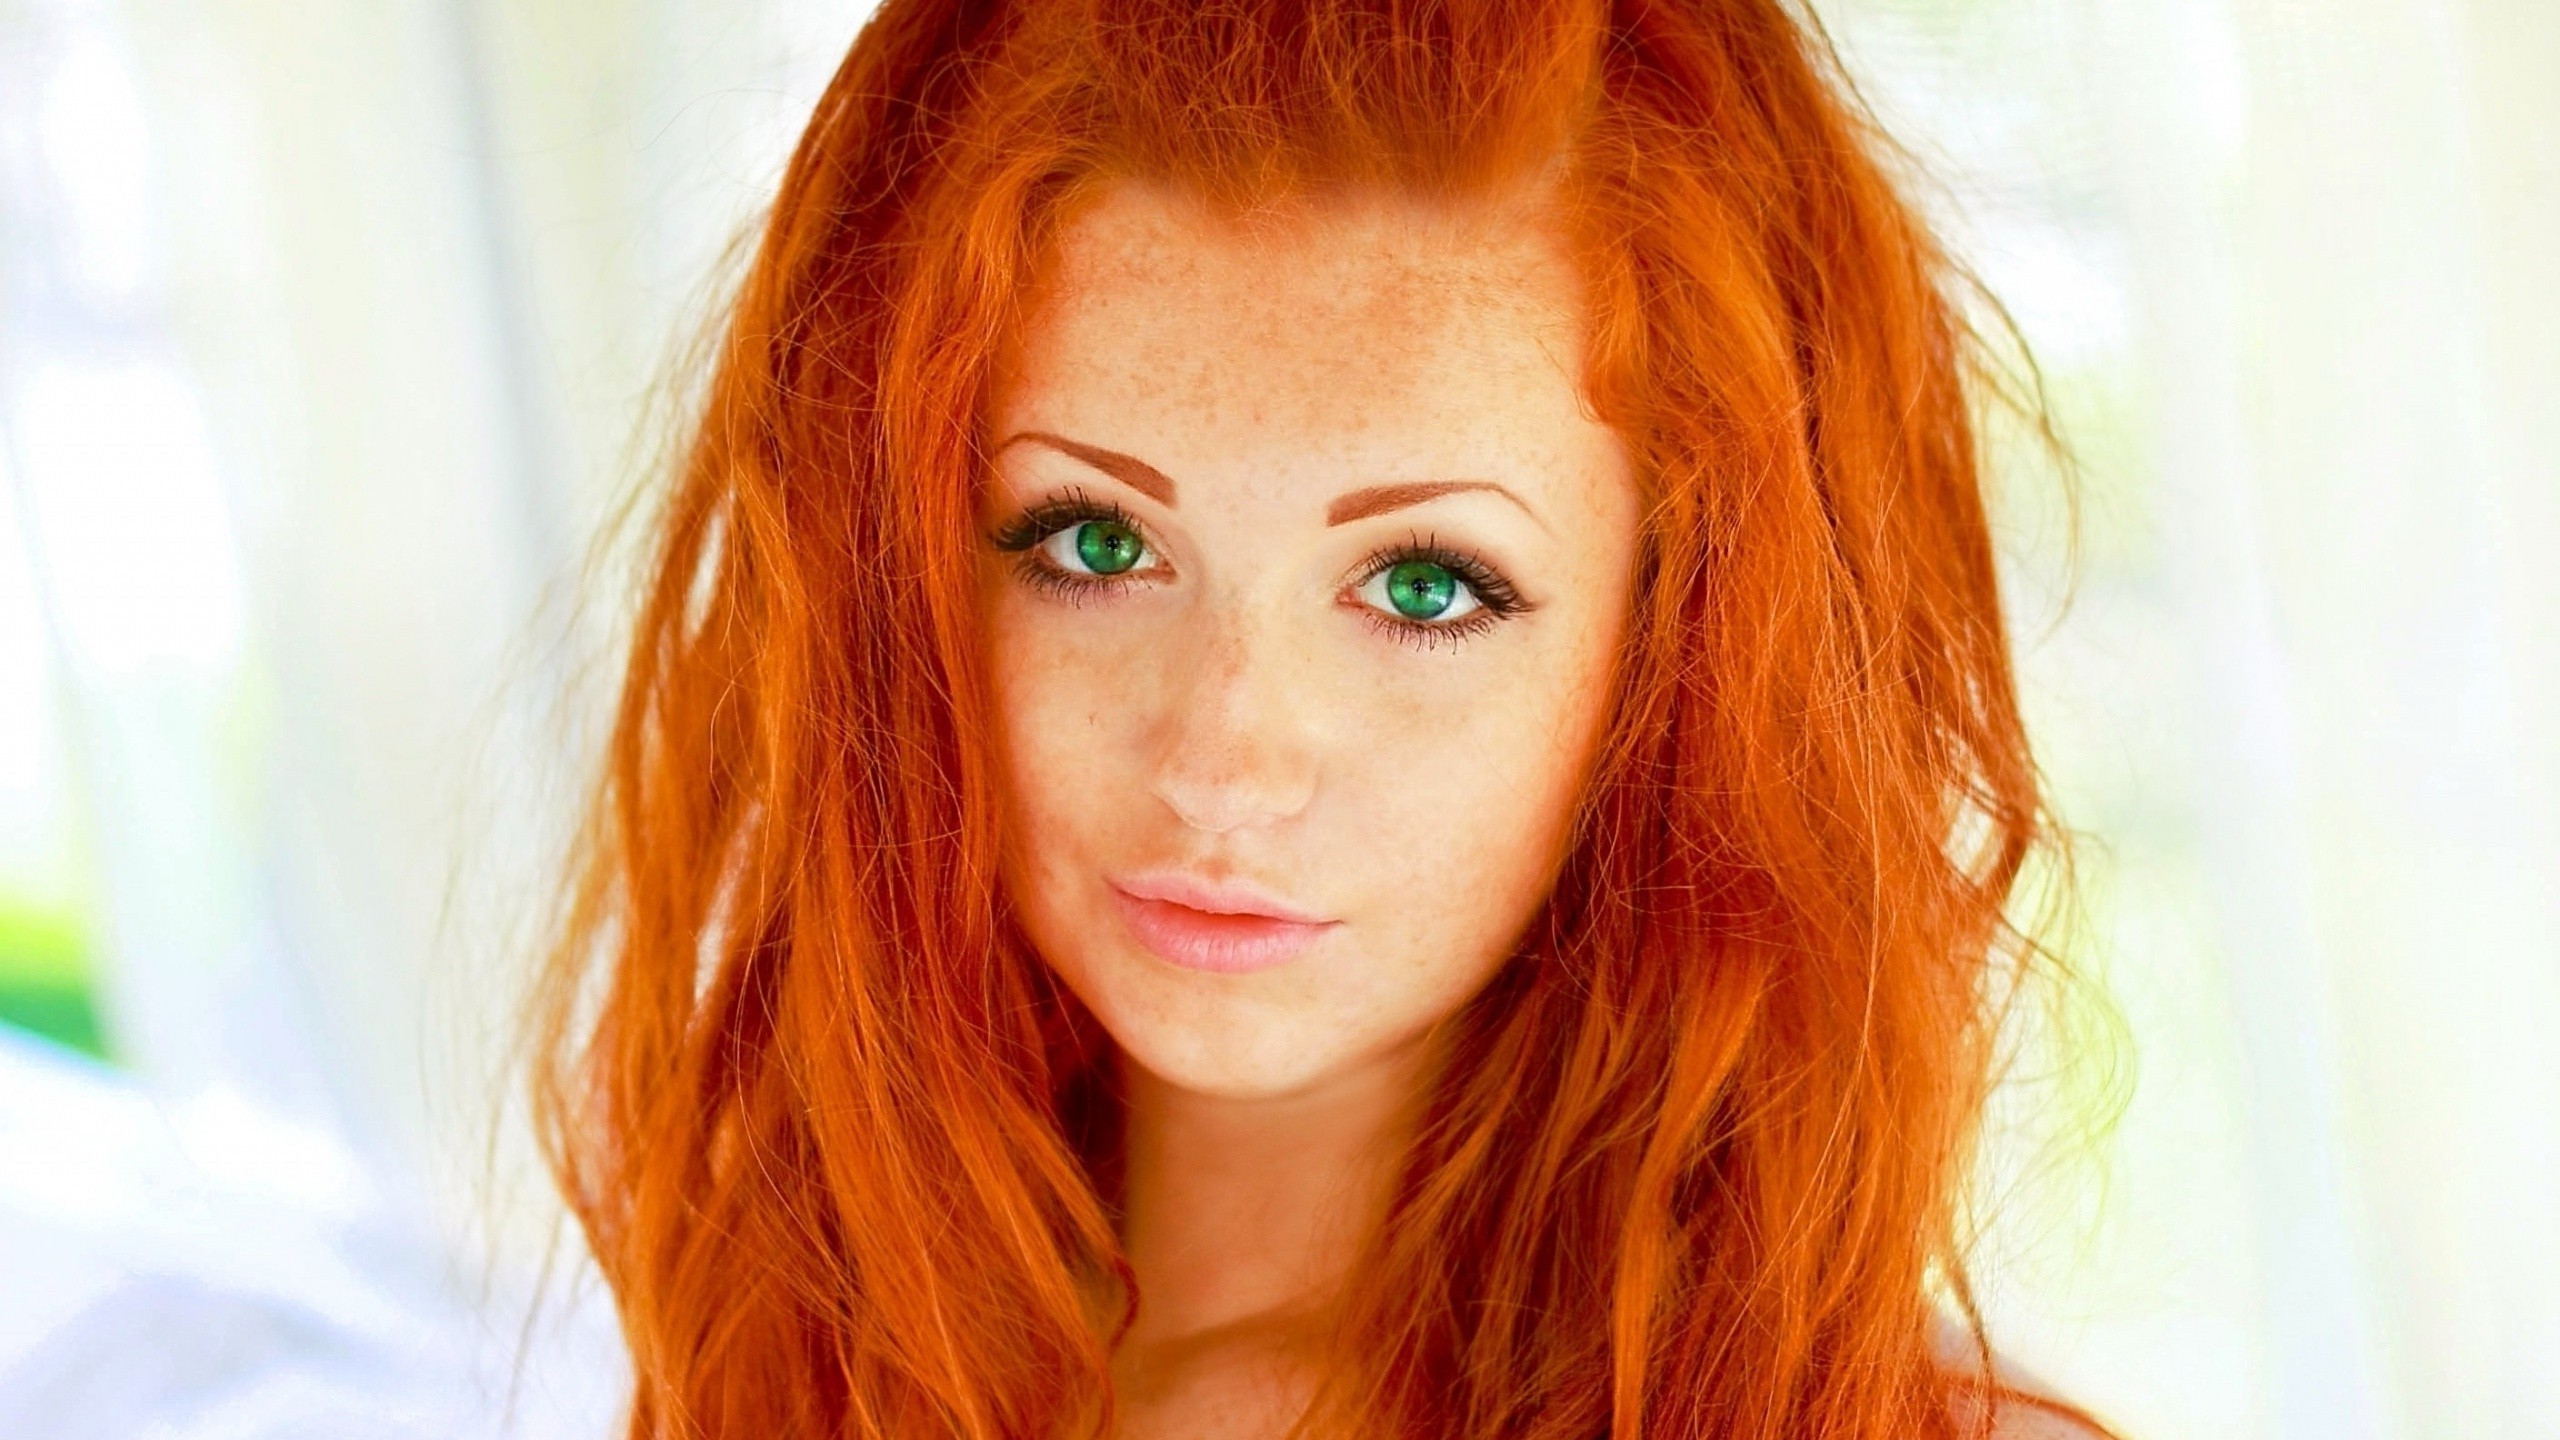 Redhead Green Eyes | Redhead with green eyes Wallpaper